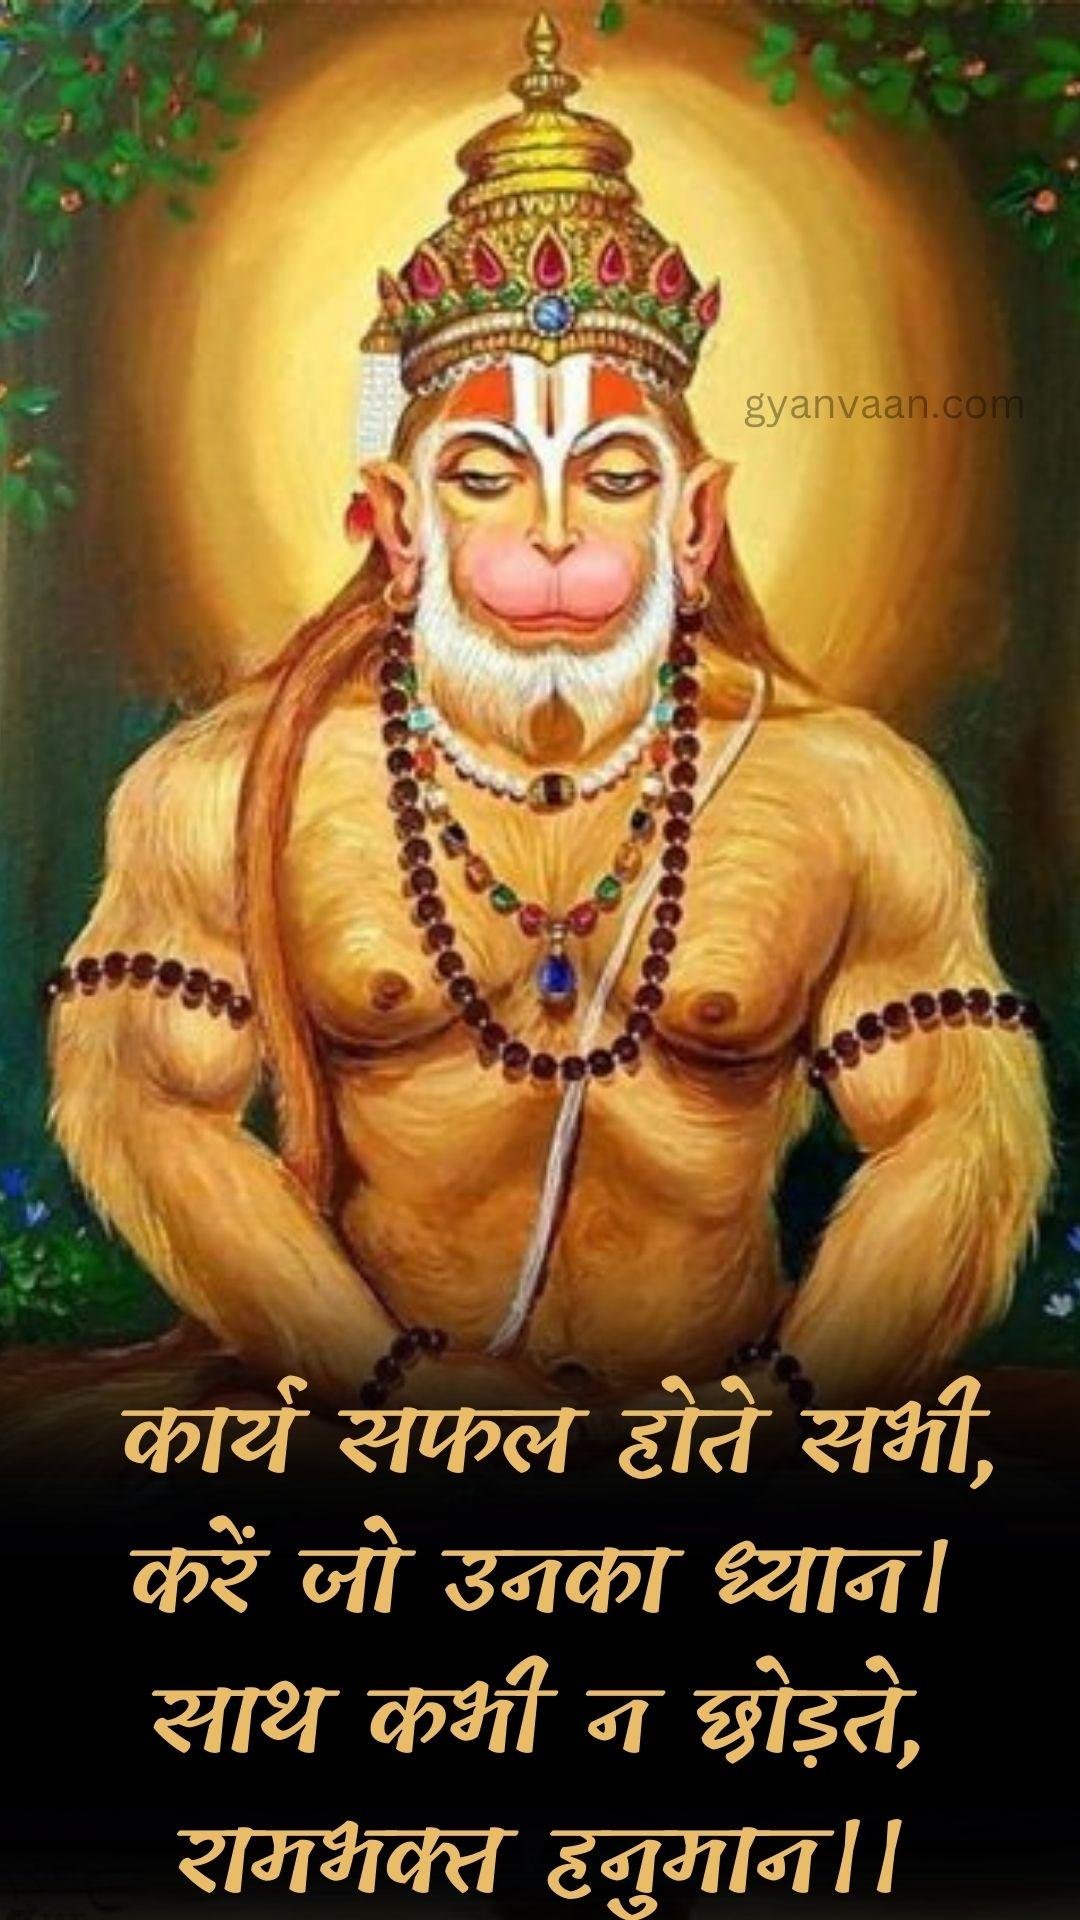 Hanuman Quotes Shayari And Whatsapp Status For Mobile With Hanuman Images And Photos 16 - Hanuman Images